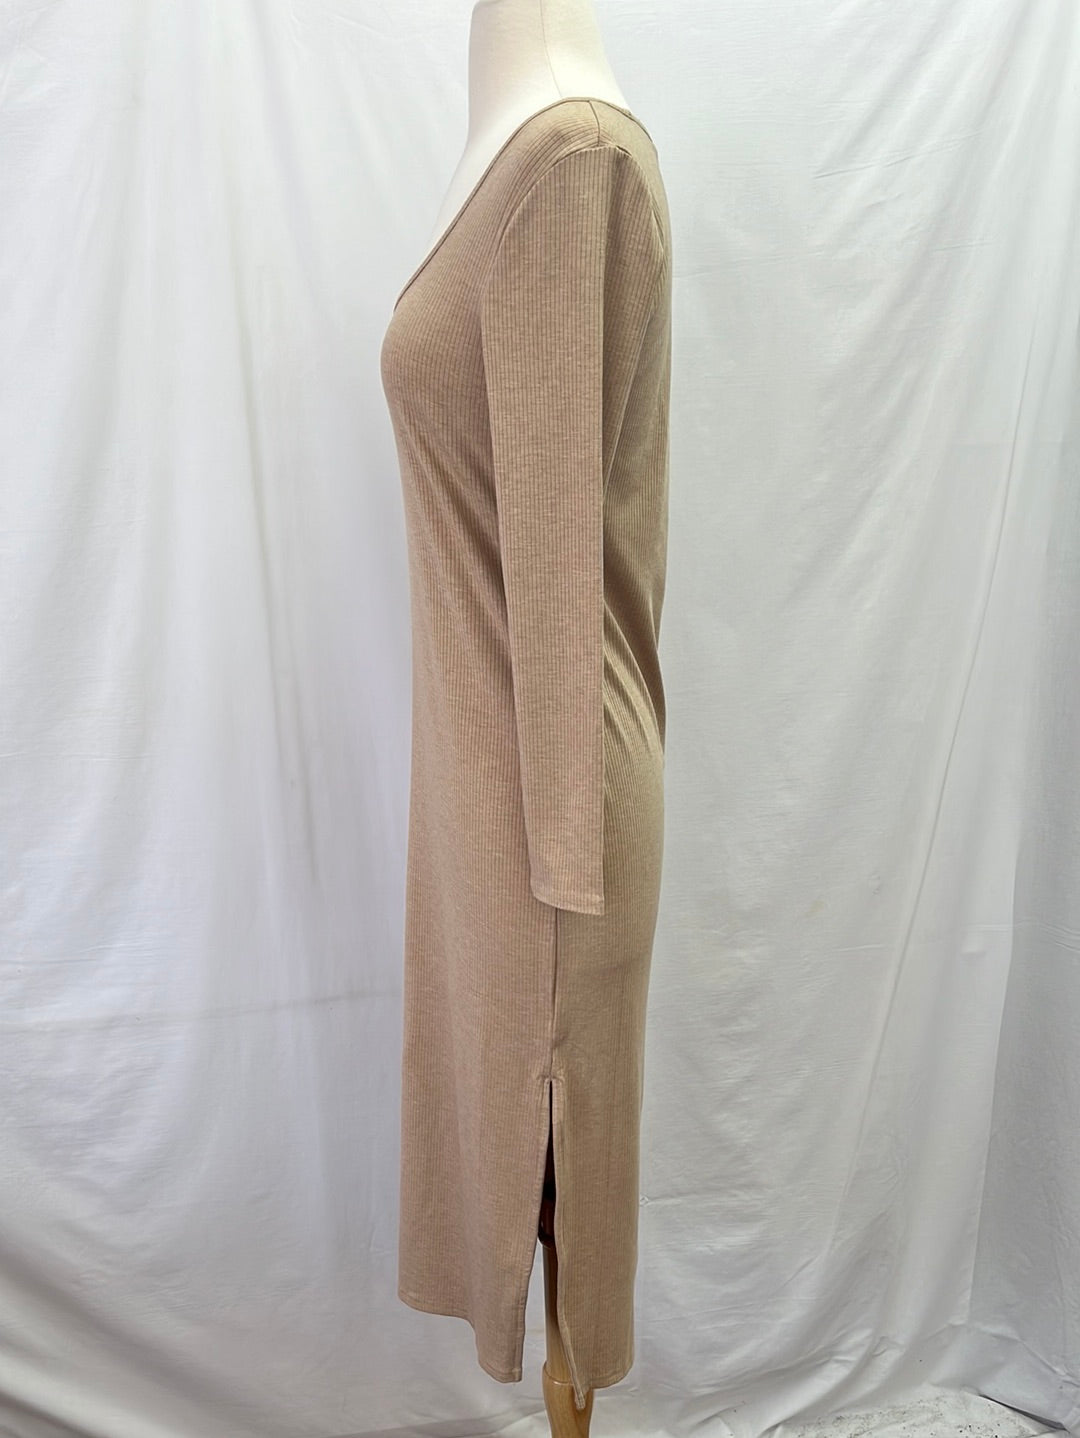 NWT - BANANA REPUBLIC Tan Boatneck Sweater Dress -- Small